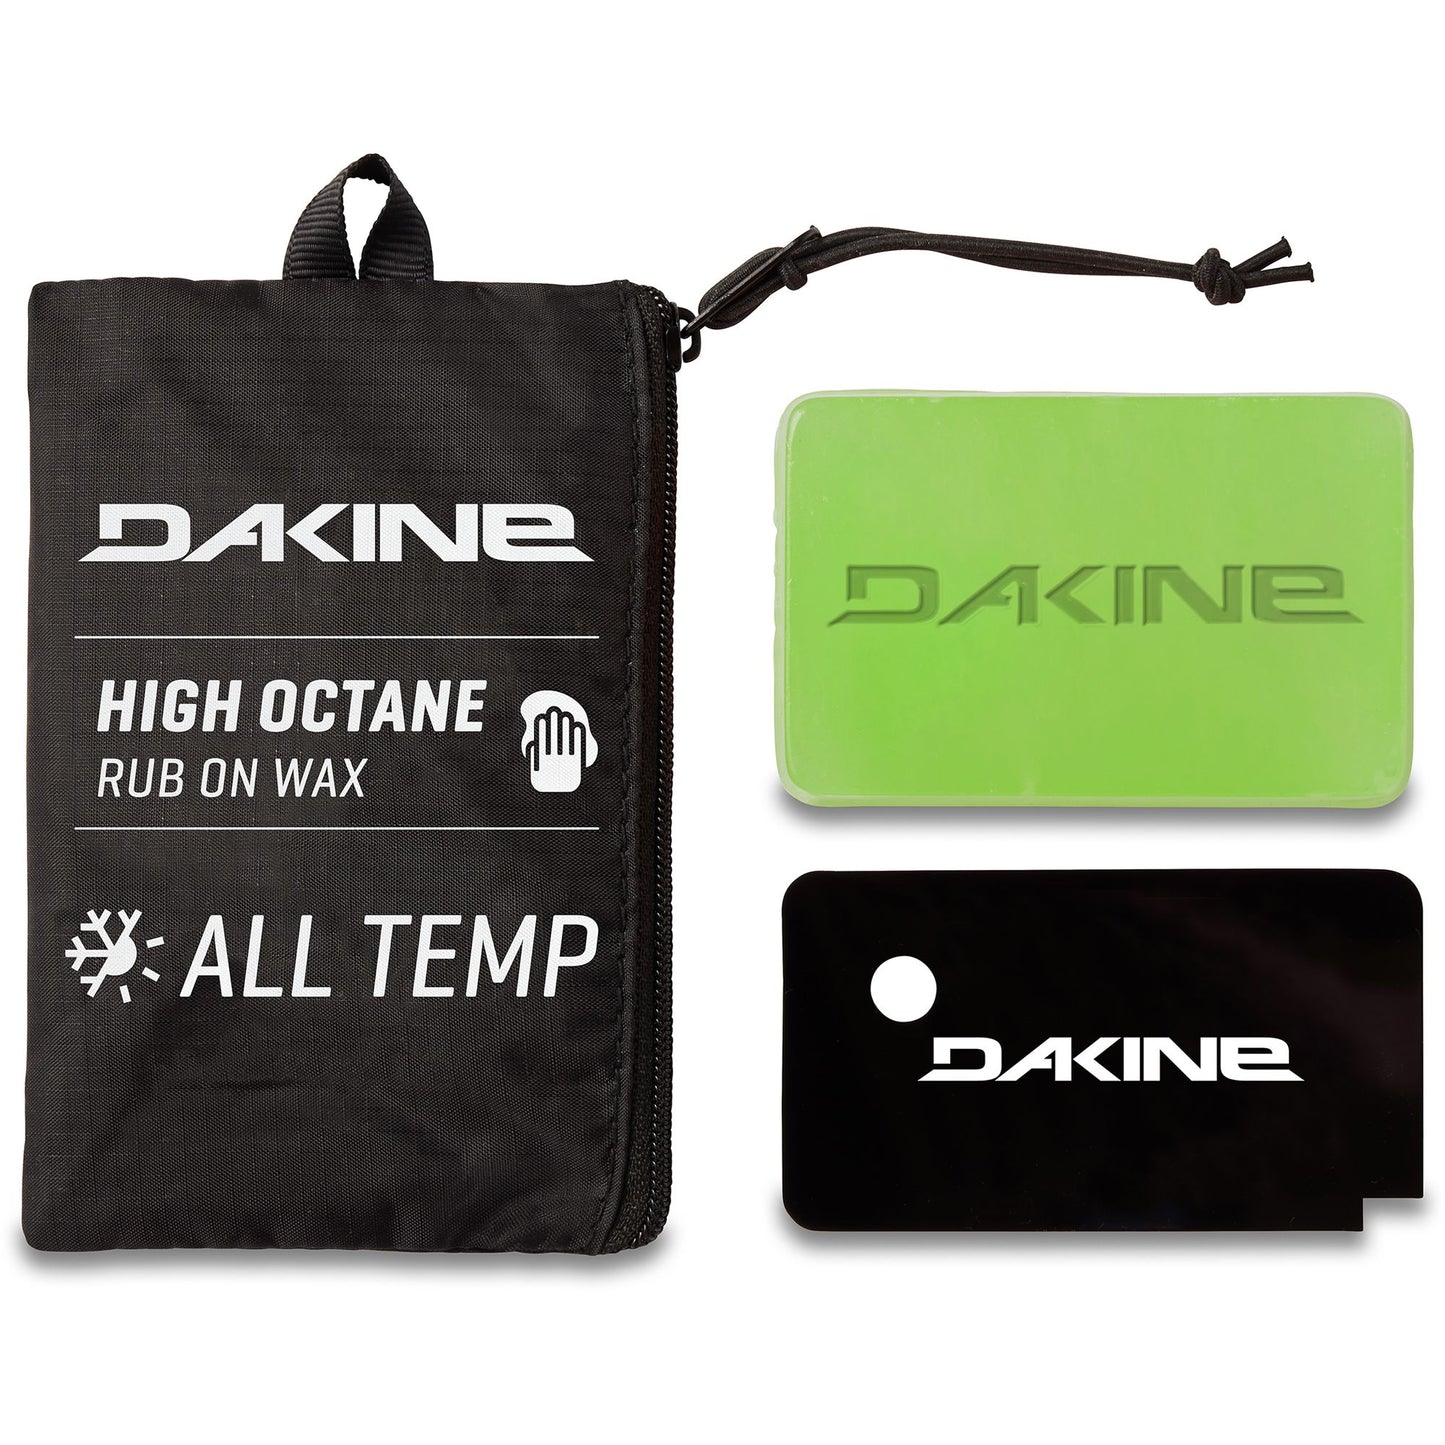 Dakine High Octane Rub On Wax 50g Multicolor OS Wax